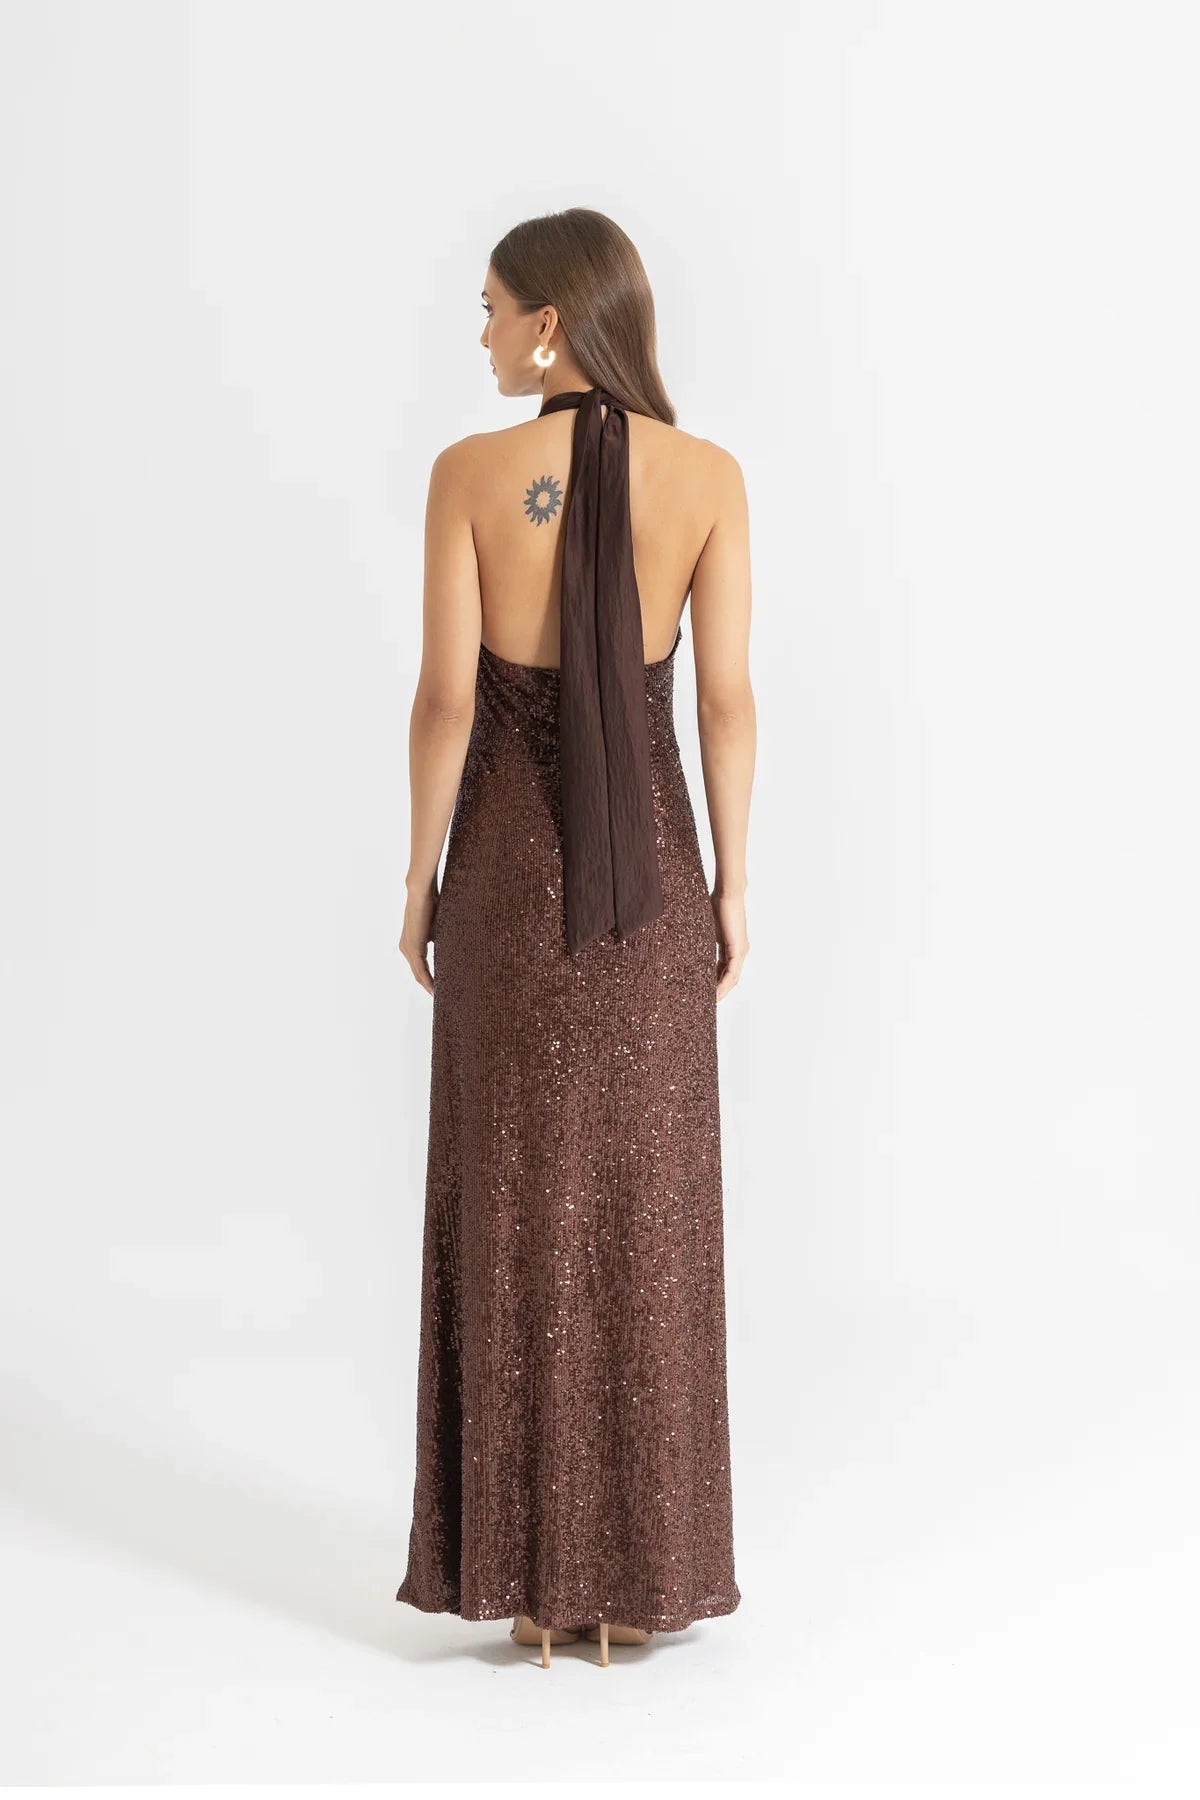 Etna Brown Dress 